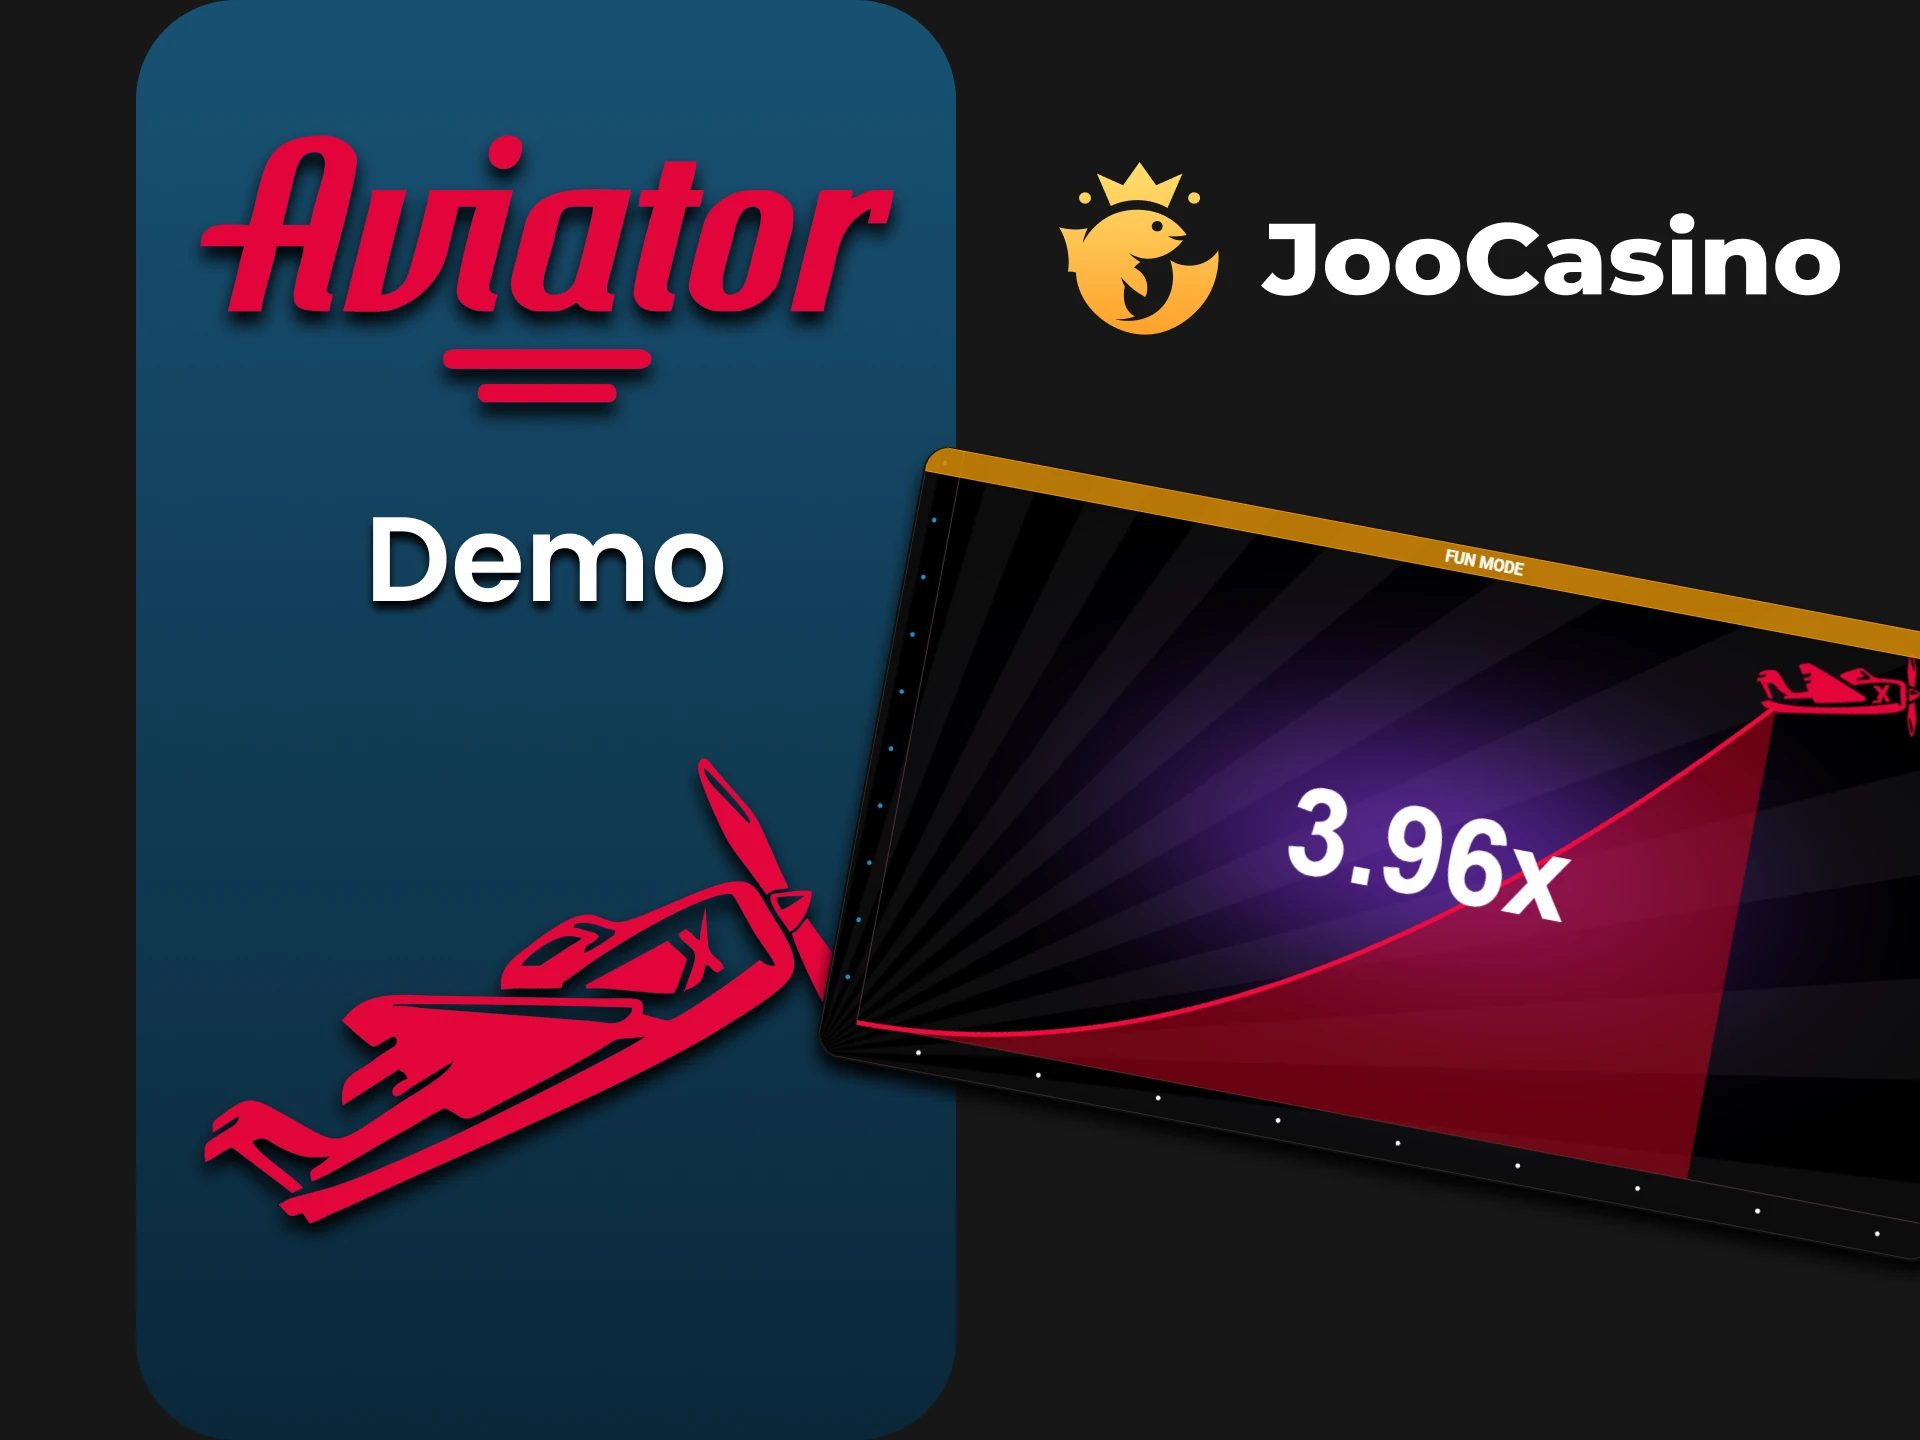 Joo Casino has a demo version of Aviator.